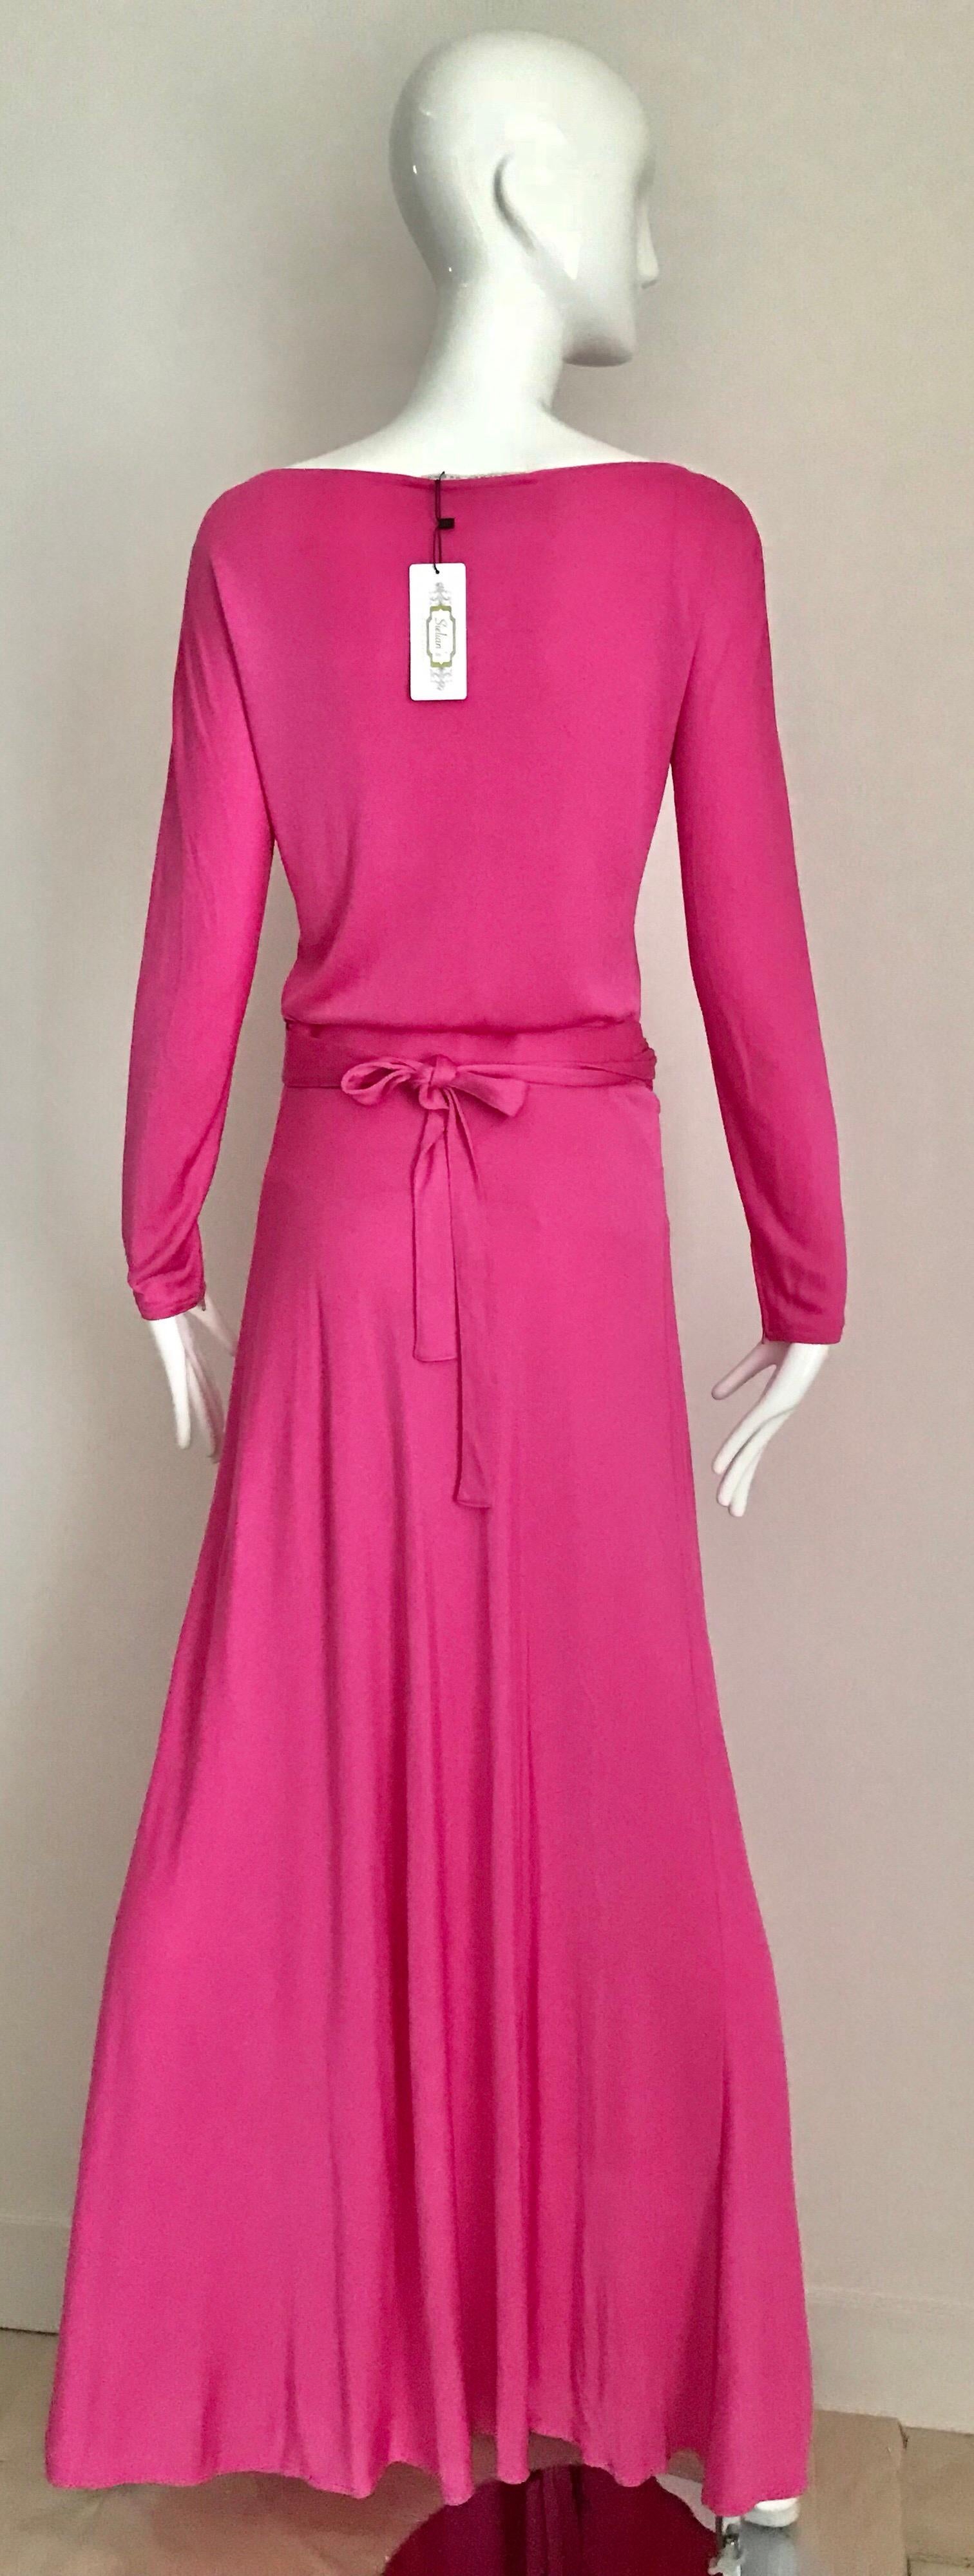 Women's Vintage Geoffrey Beene Hot Pink Matte Jersey Blouse Skirt Set For Sale